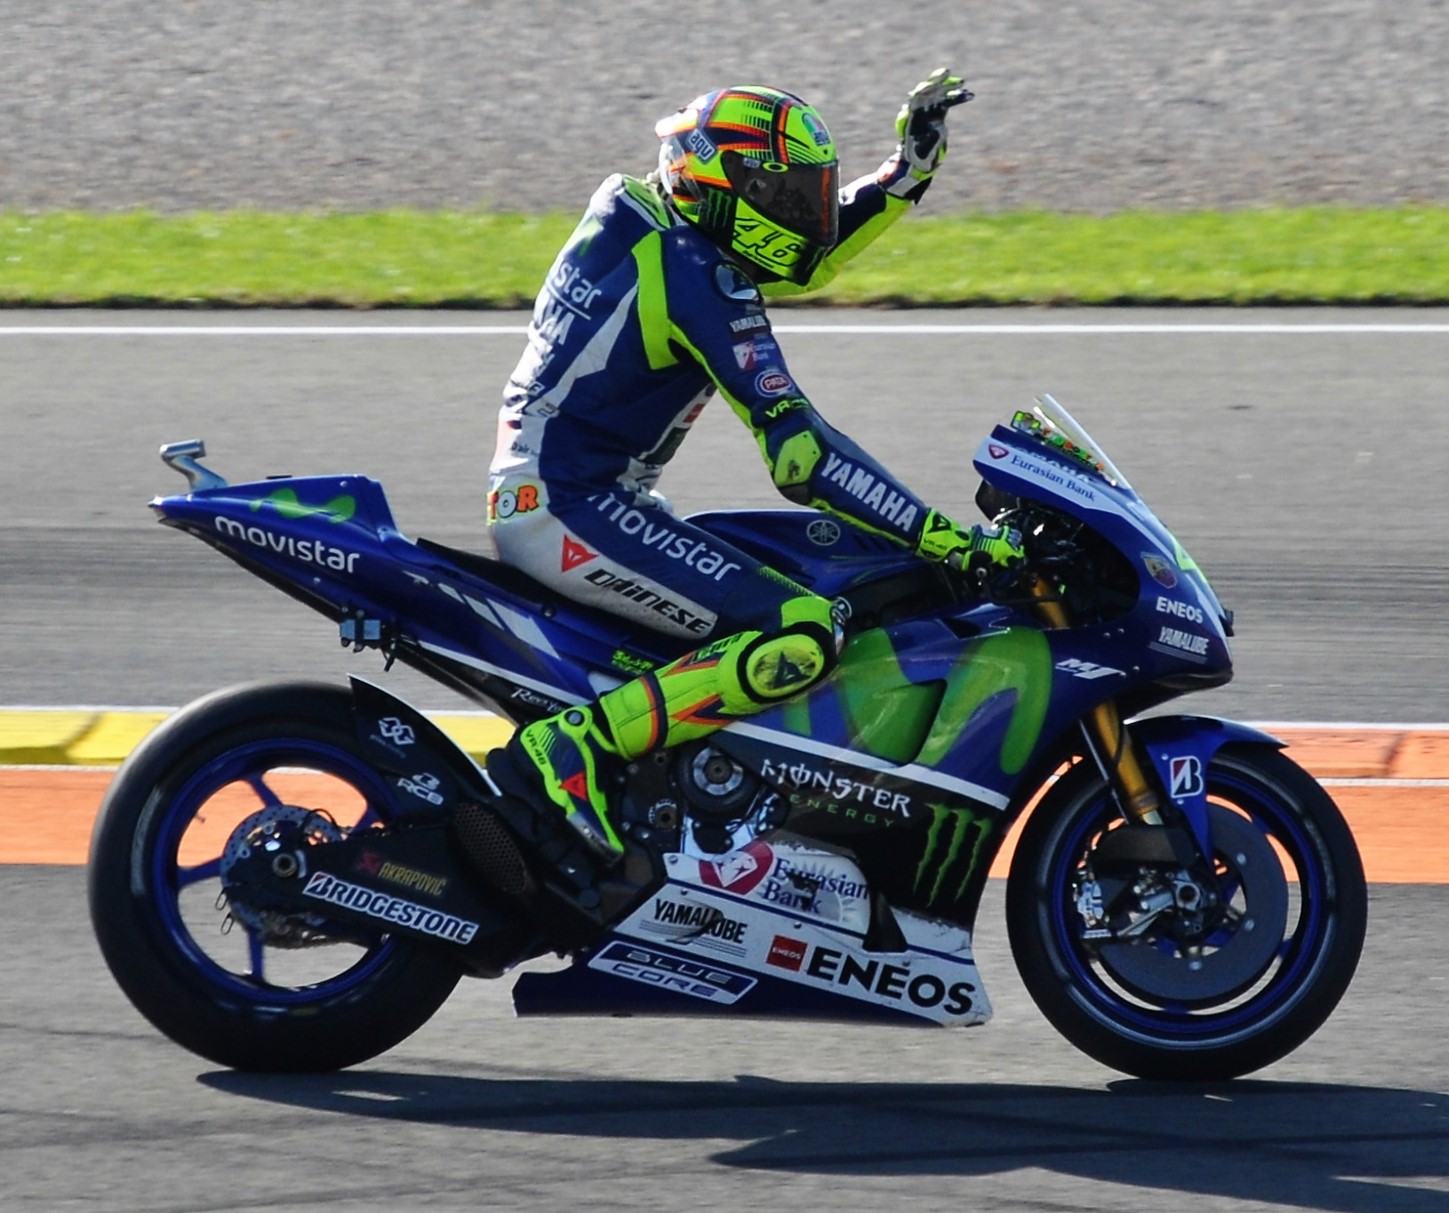 Rossi cool down lap - Valencia 2015.JPG